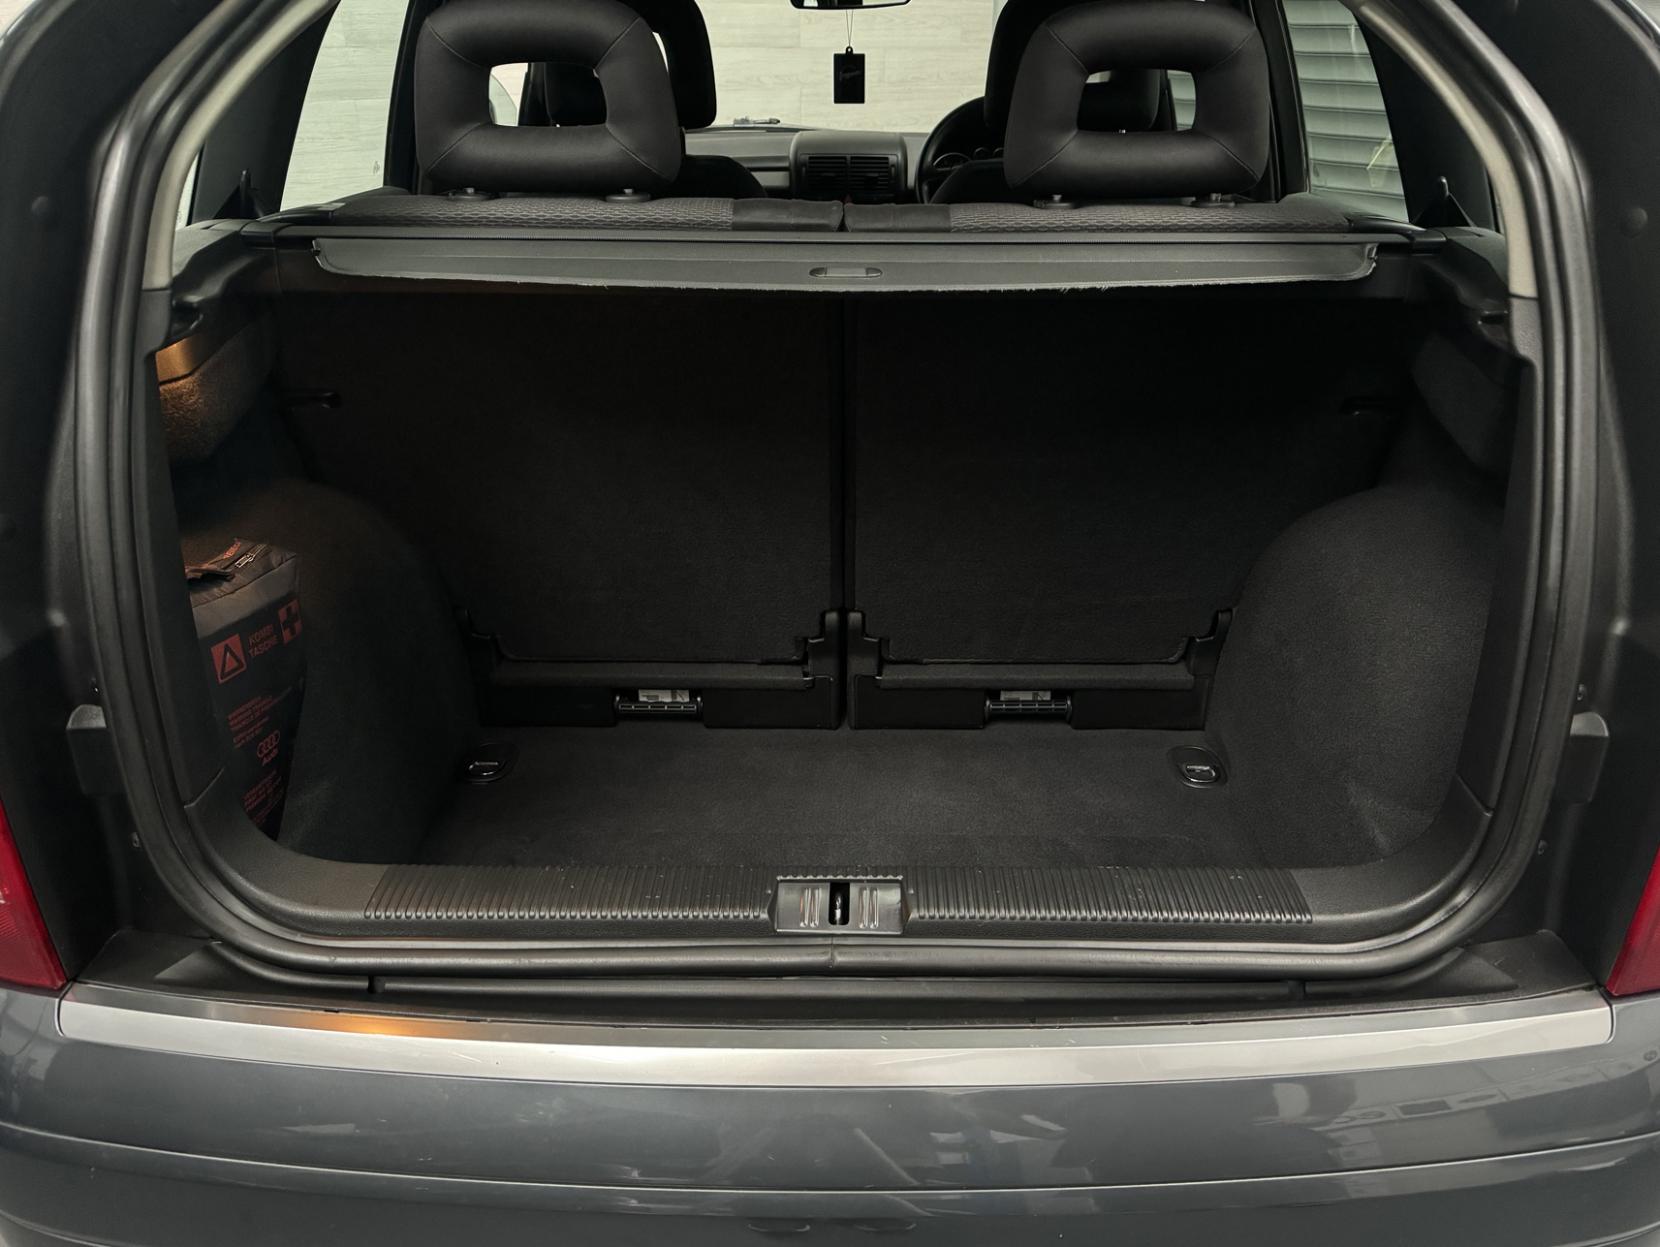 Audi A2 1.4 TDI SE Hatchback 5dr Diesel Manual (119 g/km, 75 bhp)